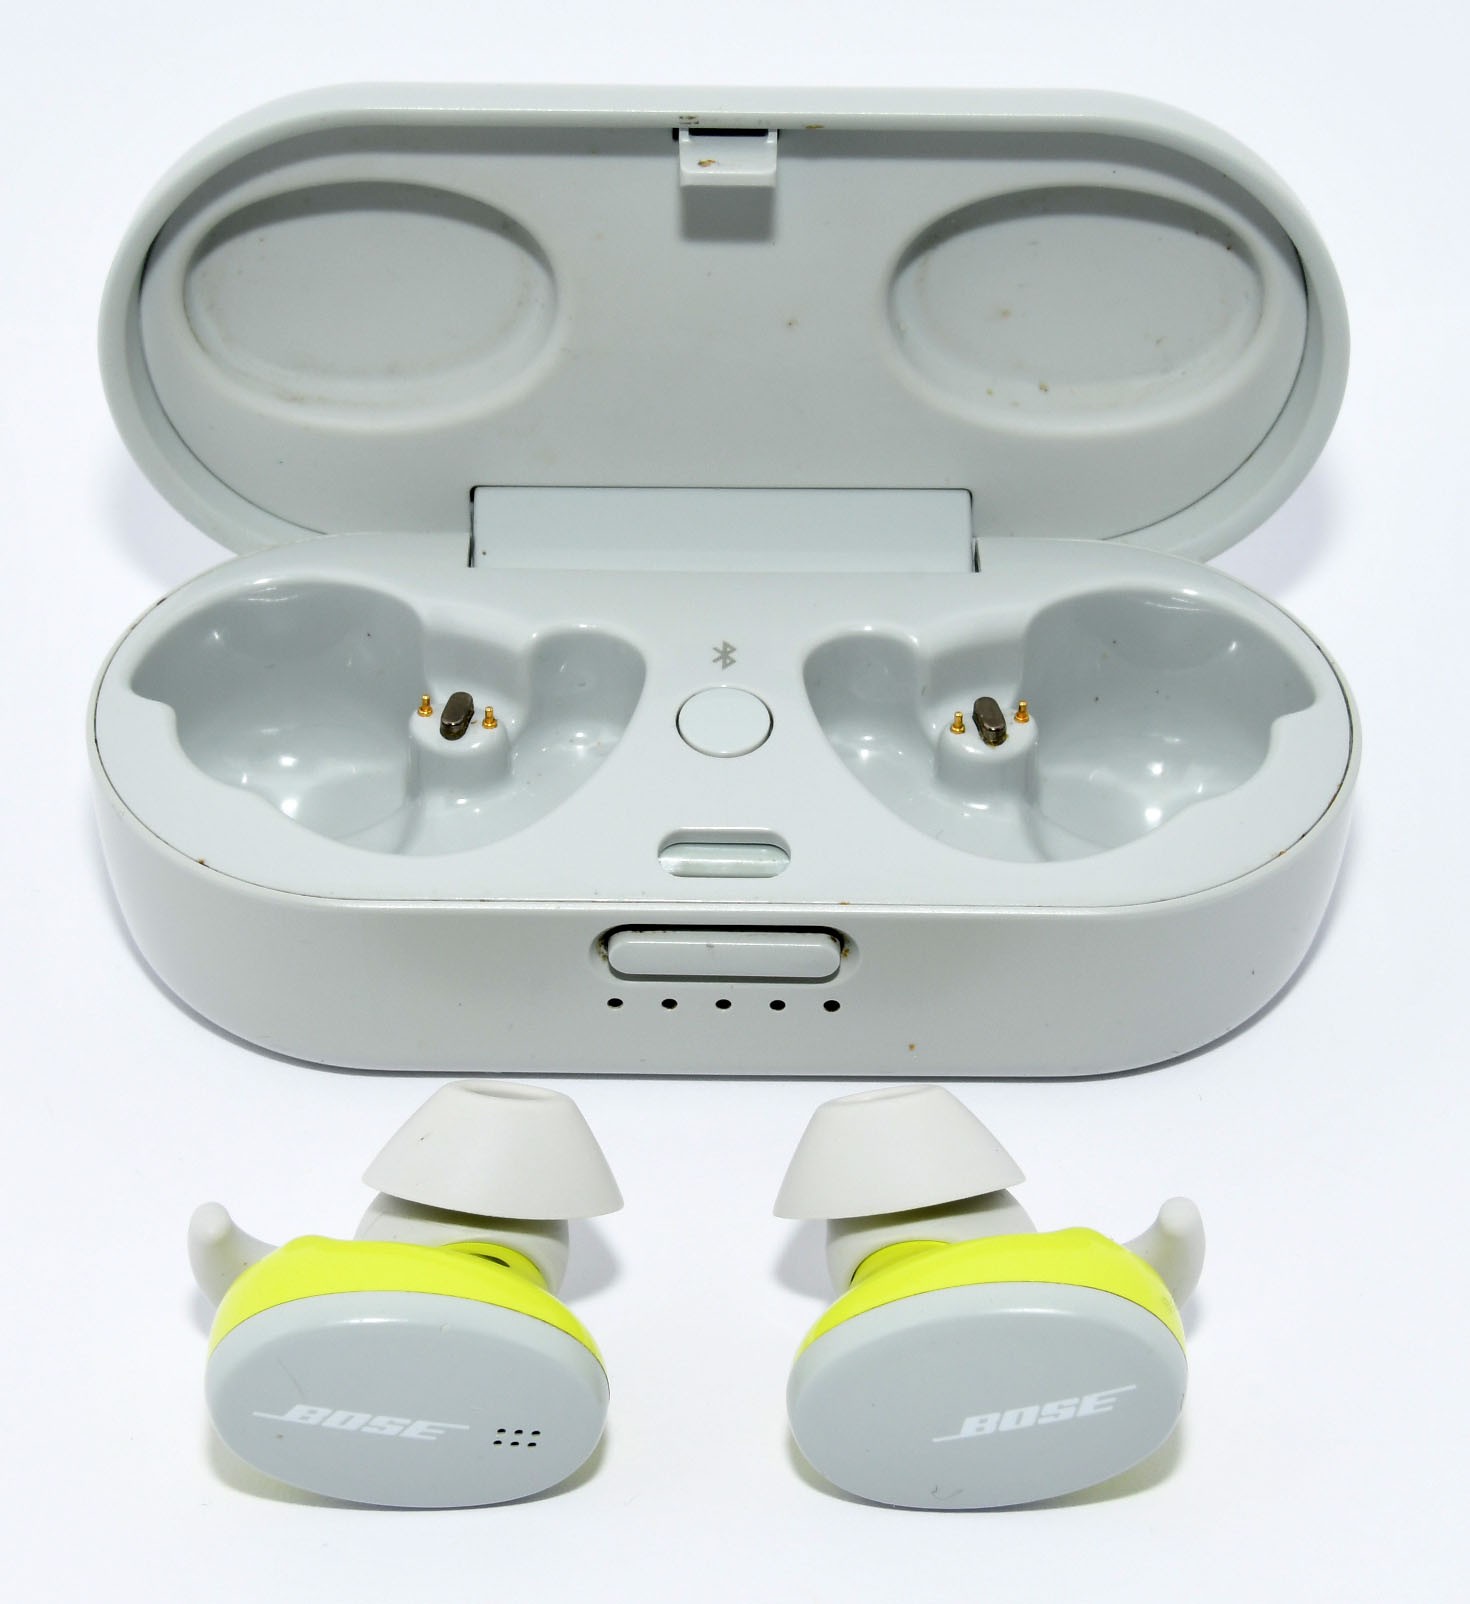 Auriculares Bluetooth True Wireless BOSE Sport (In Ear - Micrófono - Negro)